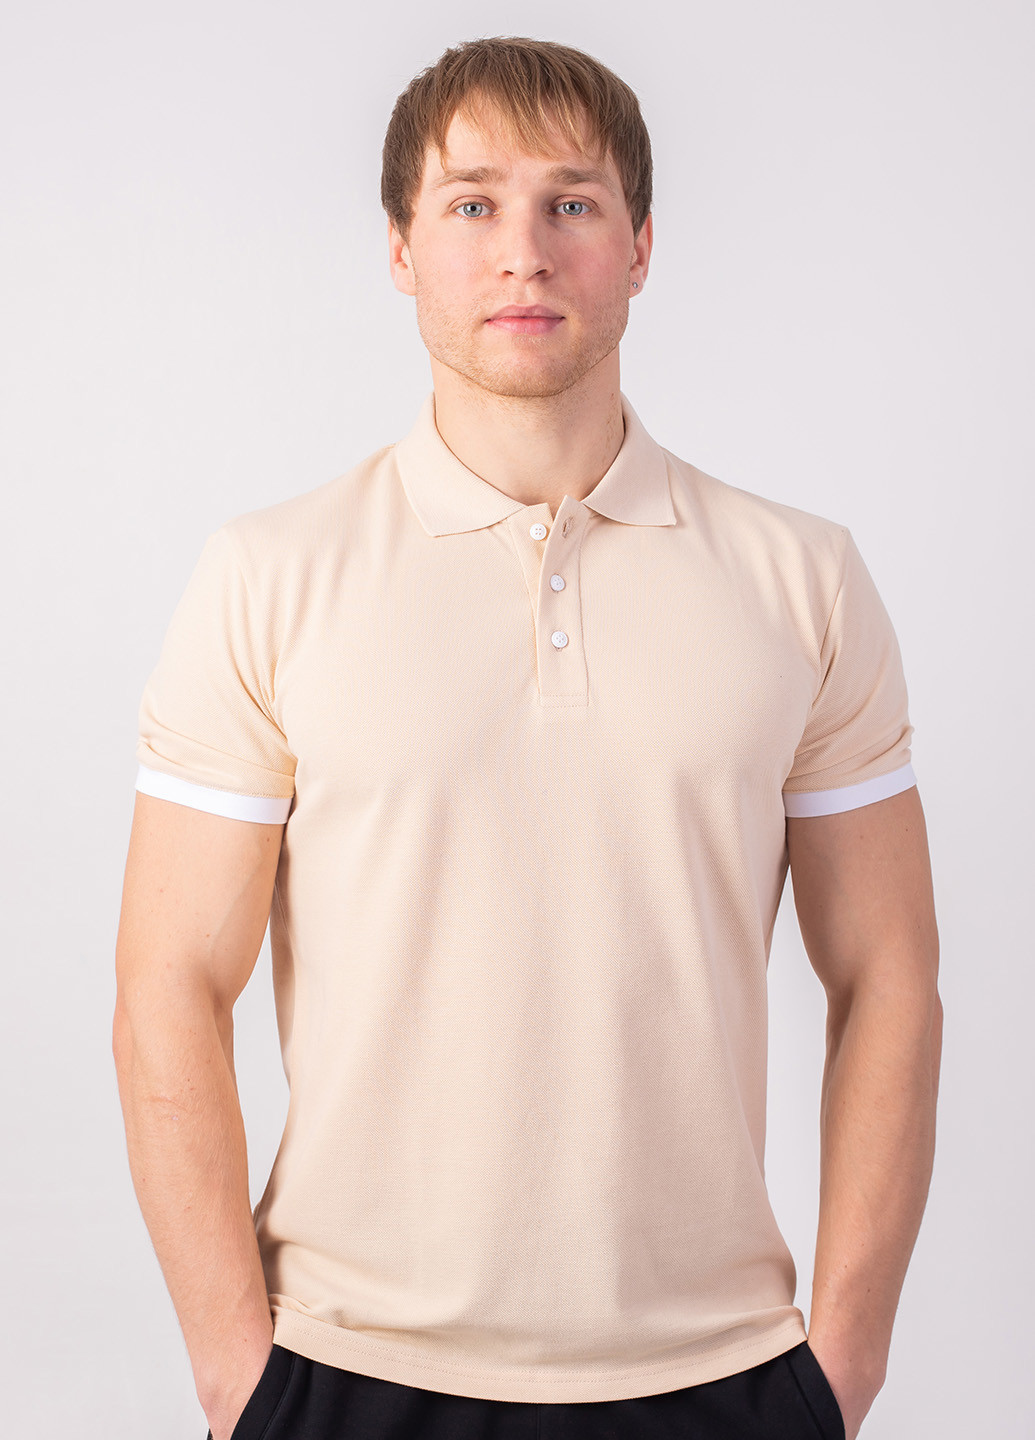 Бежевая футболка-футболка поло мужская для мужчин TvoePolo